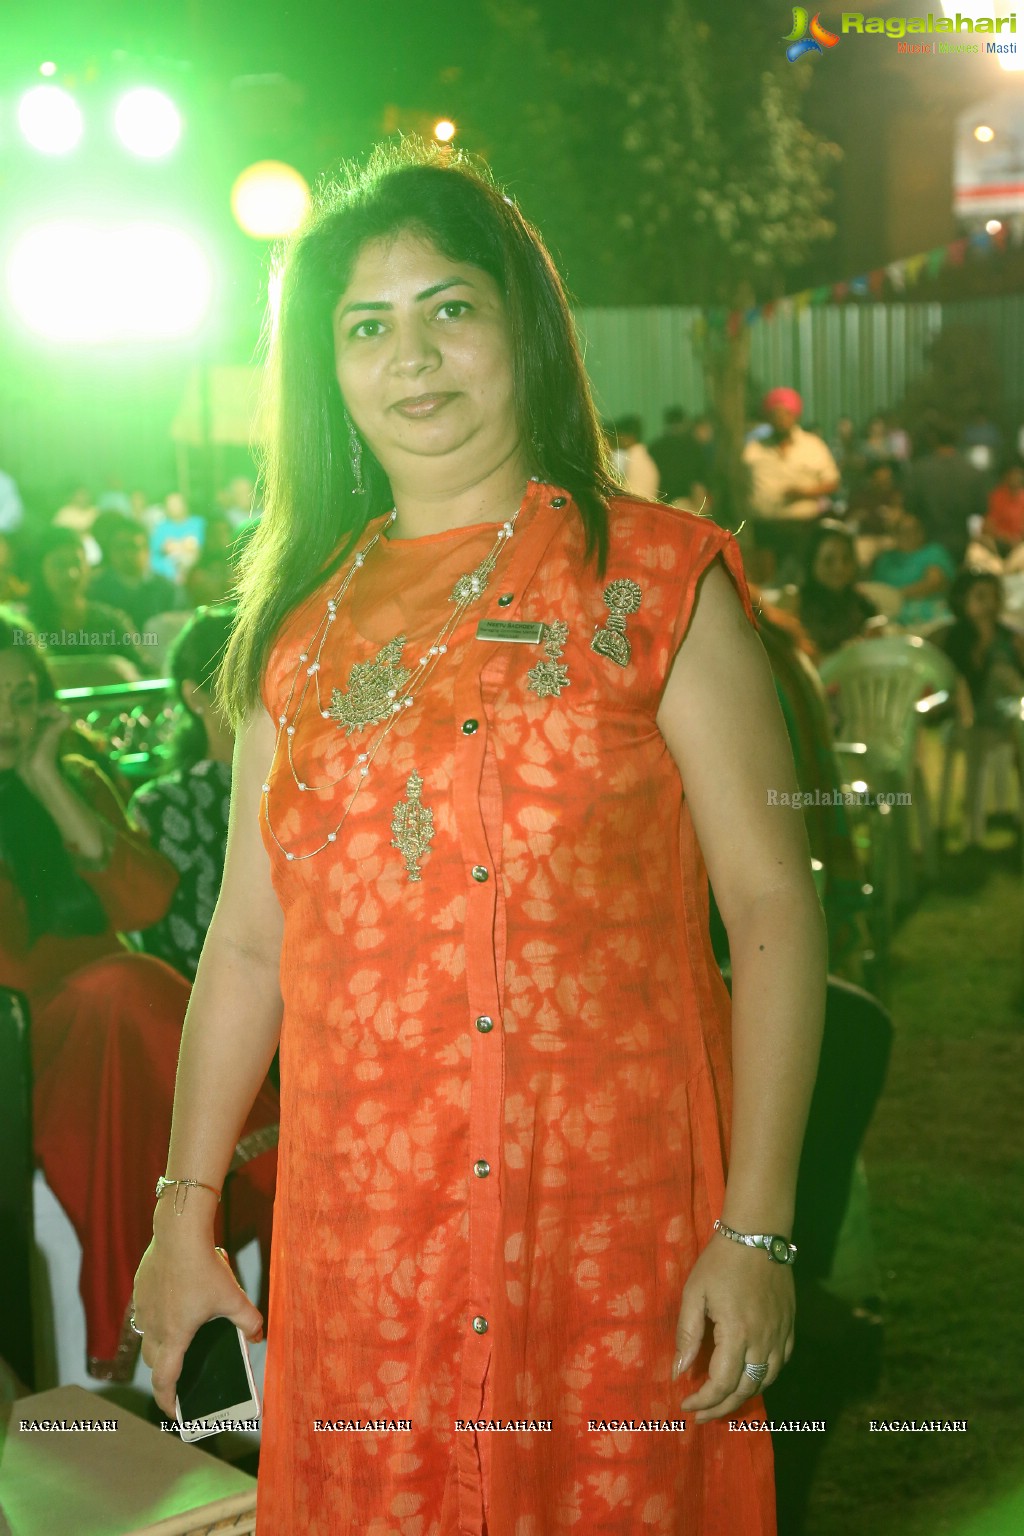 Lohri Mela by Telangana Punjabi Sabha Phulkari at Country Club, Begumpet, Hyderabad